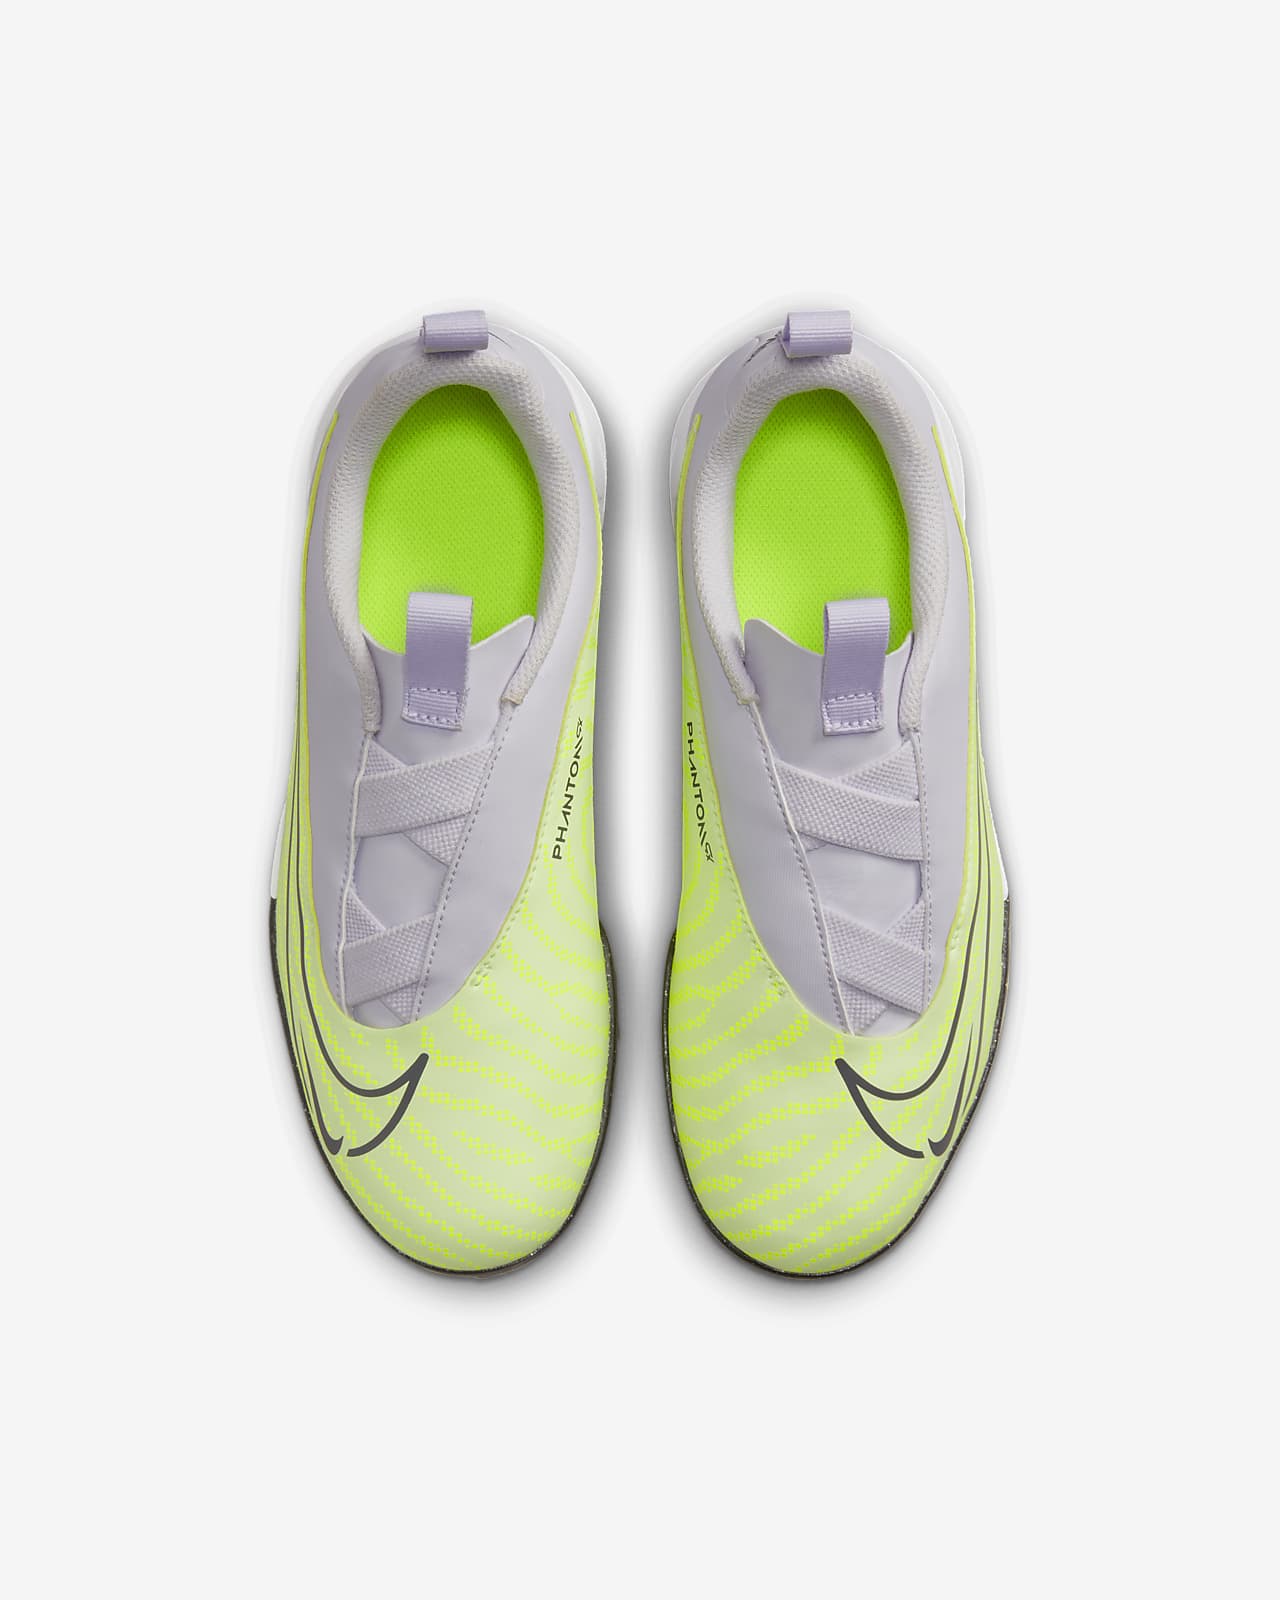 Nike Jr. Phantom Academy Big Turf Soccer Shoes.